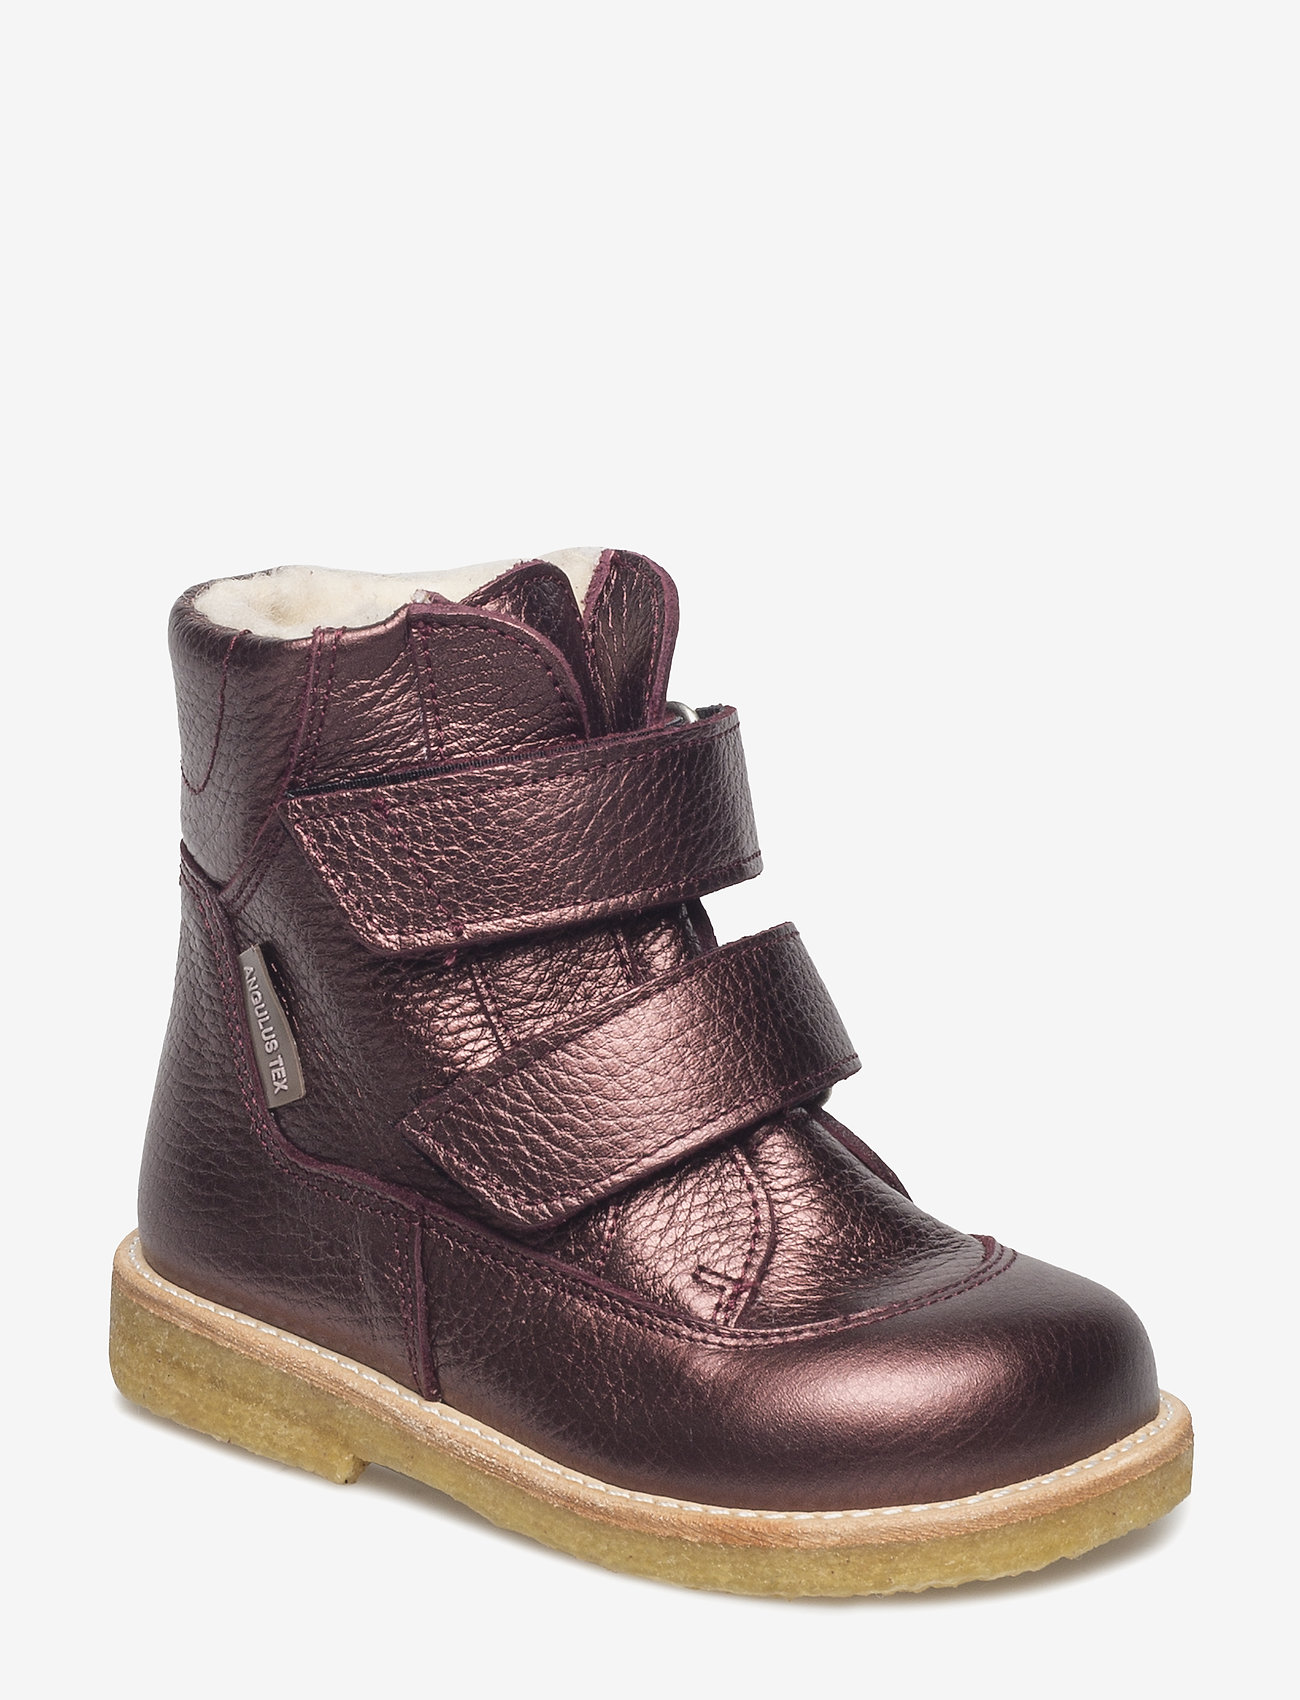 ANGULUS - Boots - flat - with velcro - lapsed - 1536 bordeaux shine - 0